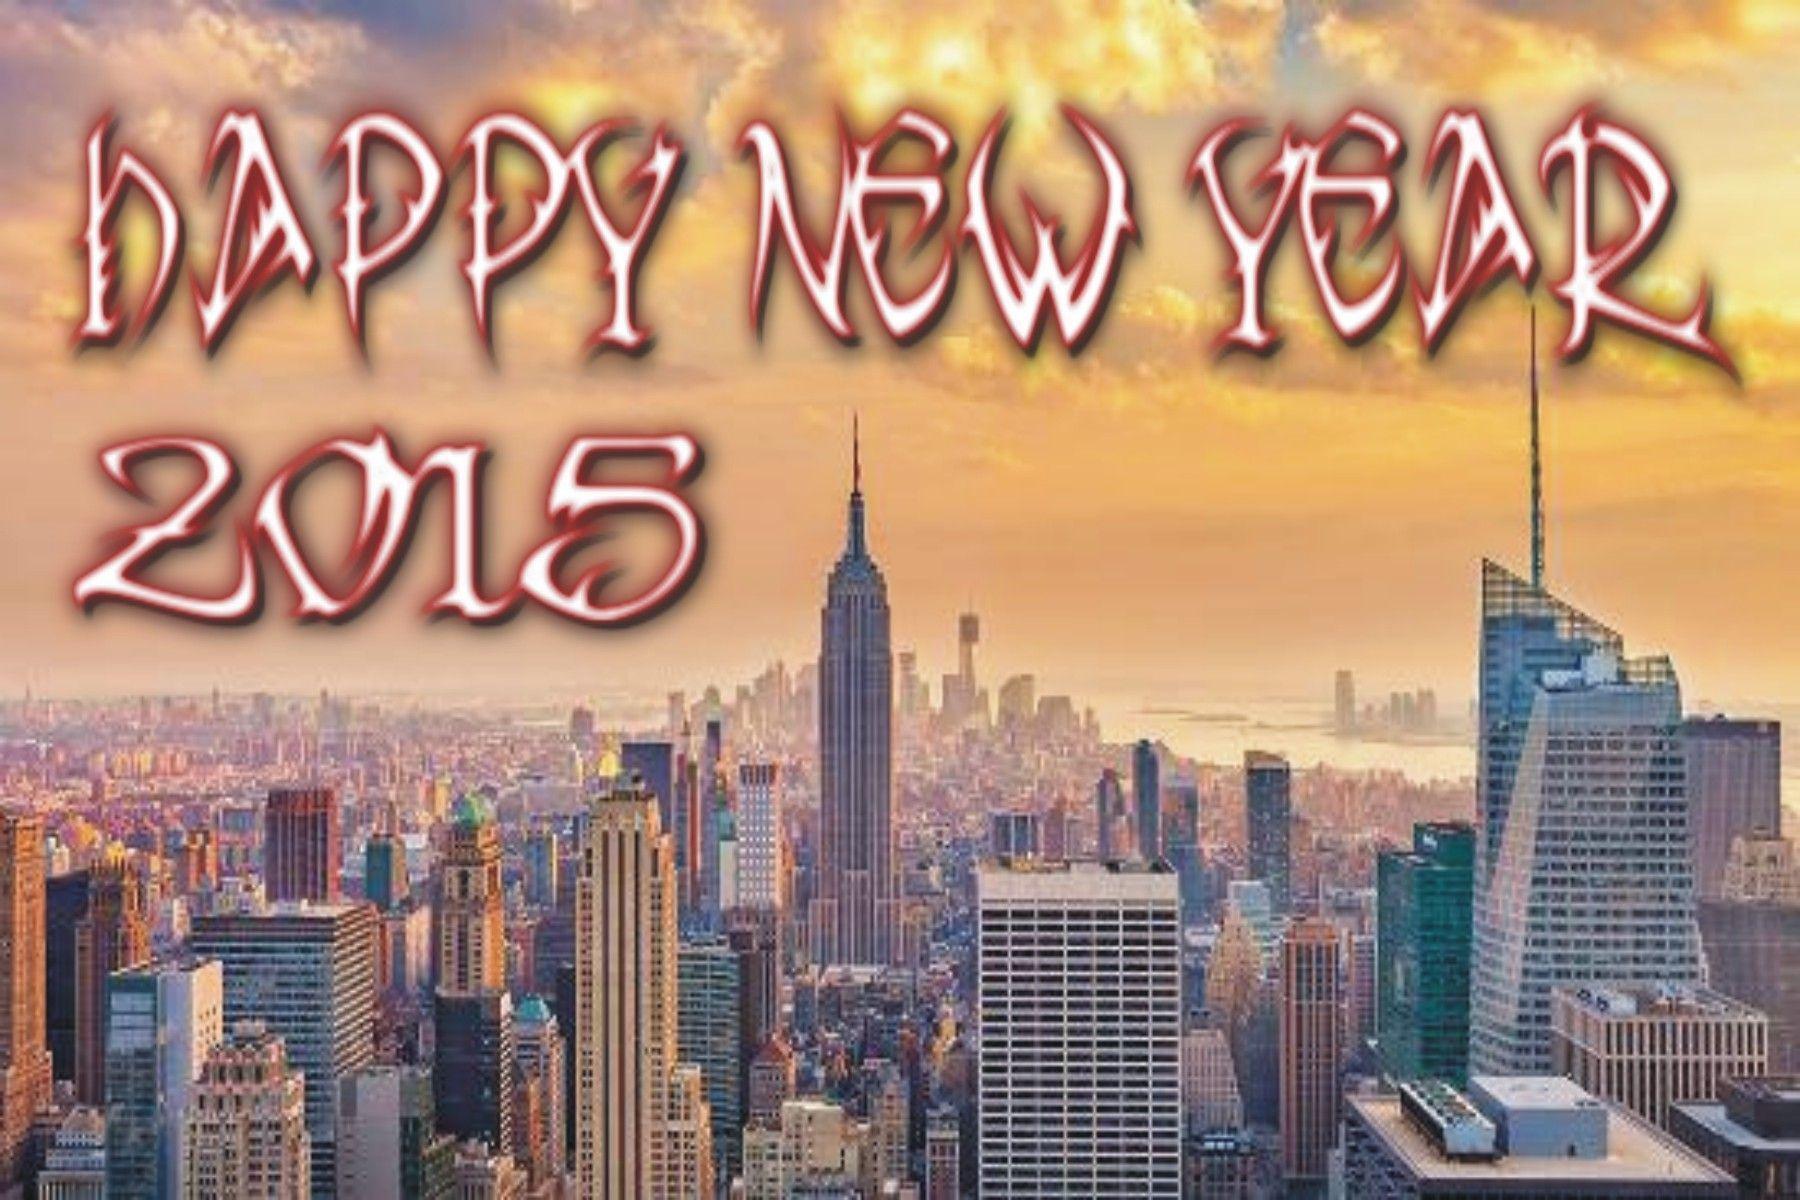 Happy New Year 2015 Photos 7. Quotesvsfun